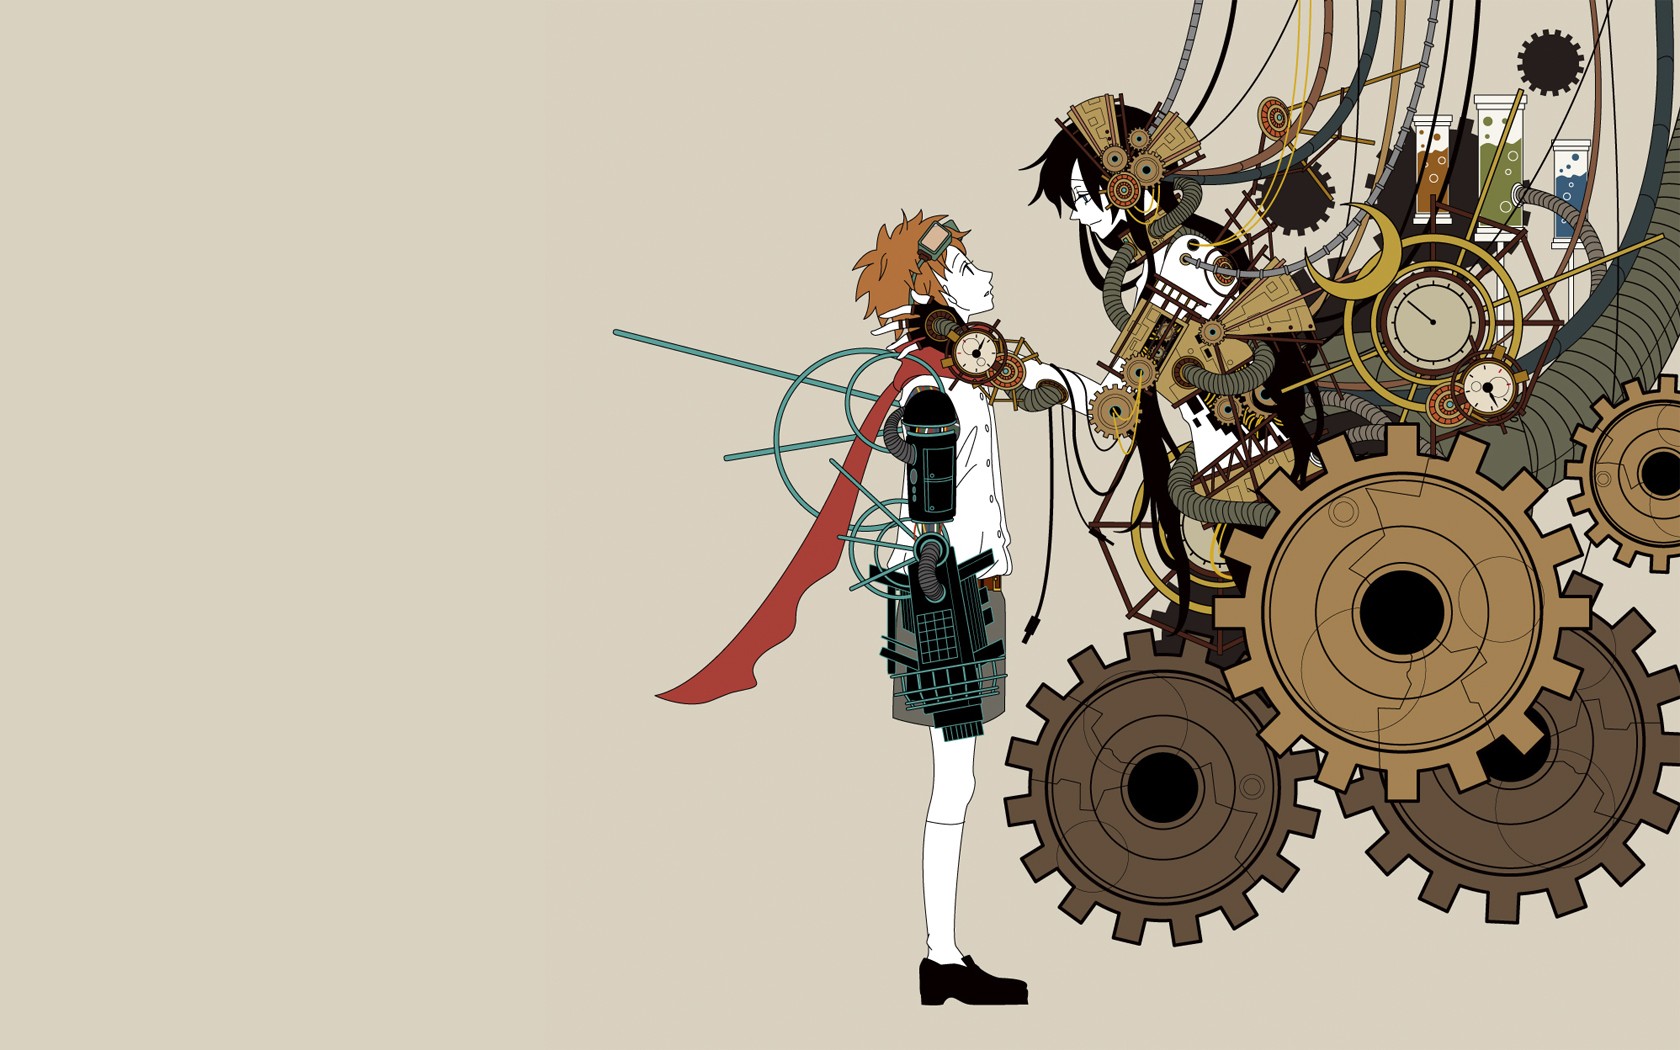 Anime steampunk girl 5 by NeuroMage on DeviantArt